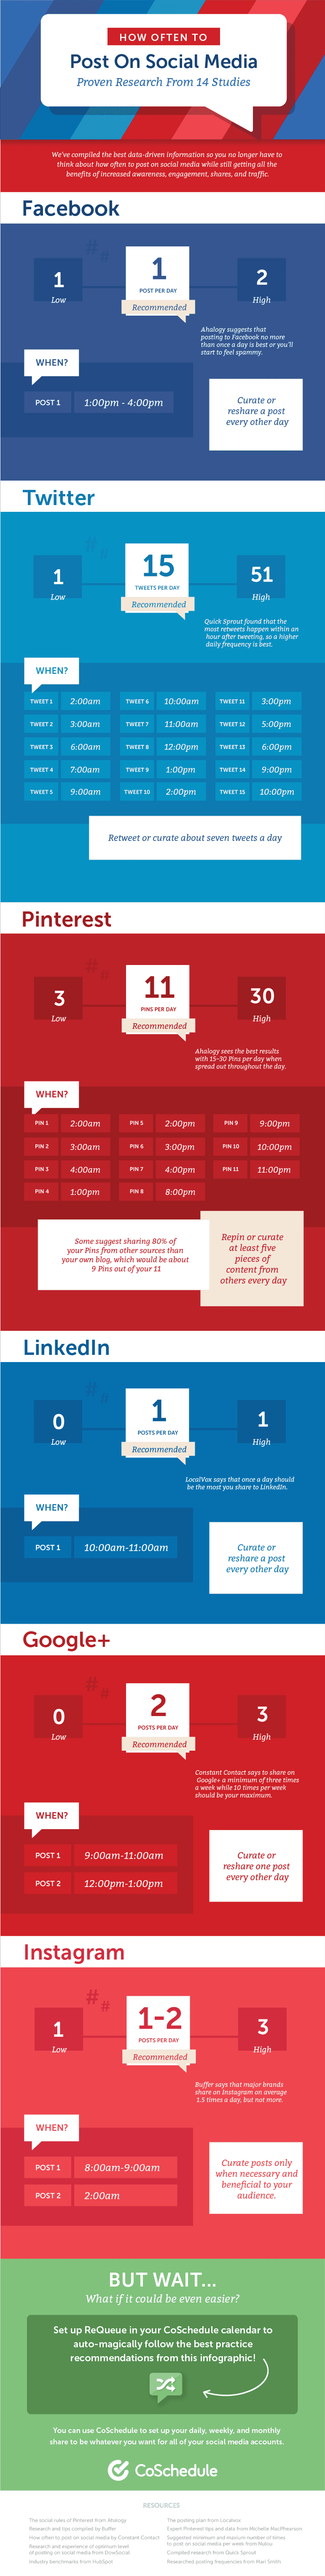 How Often to Post on Social Media? - Infographic